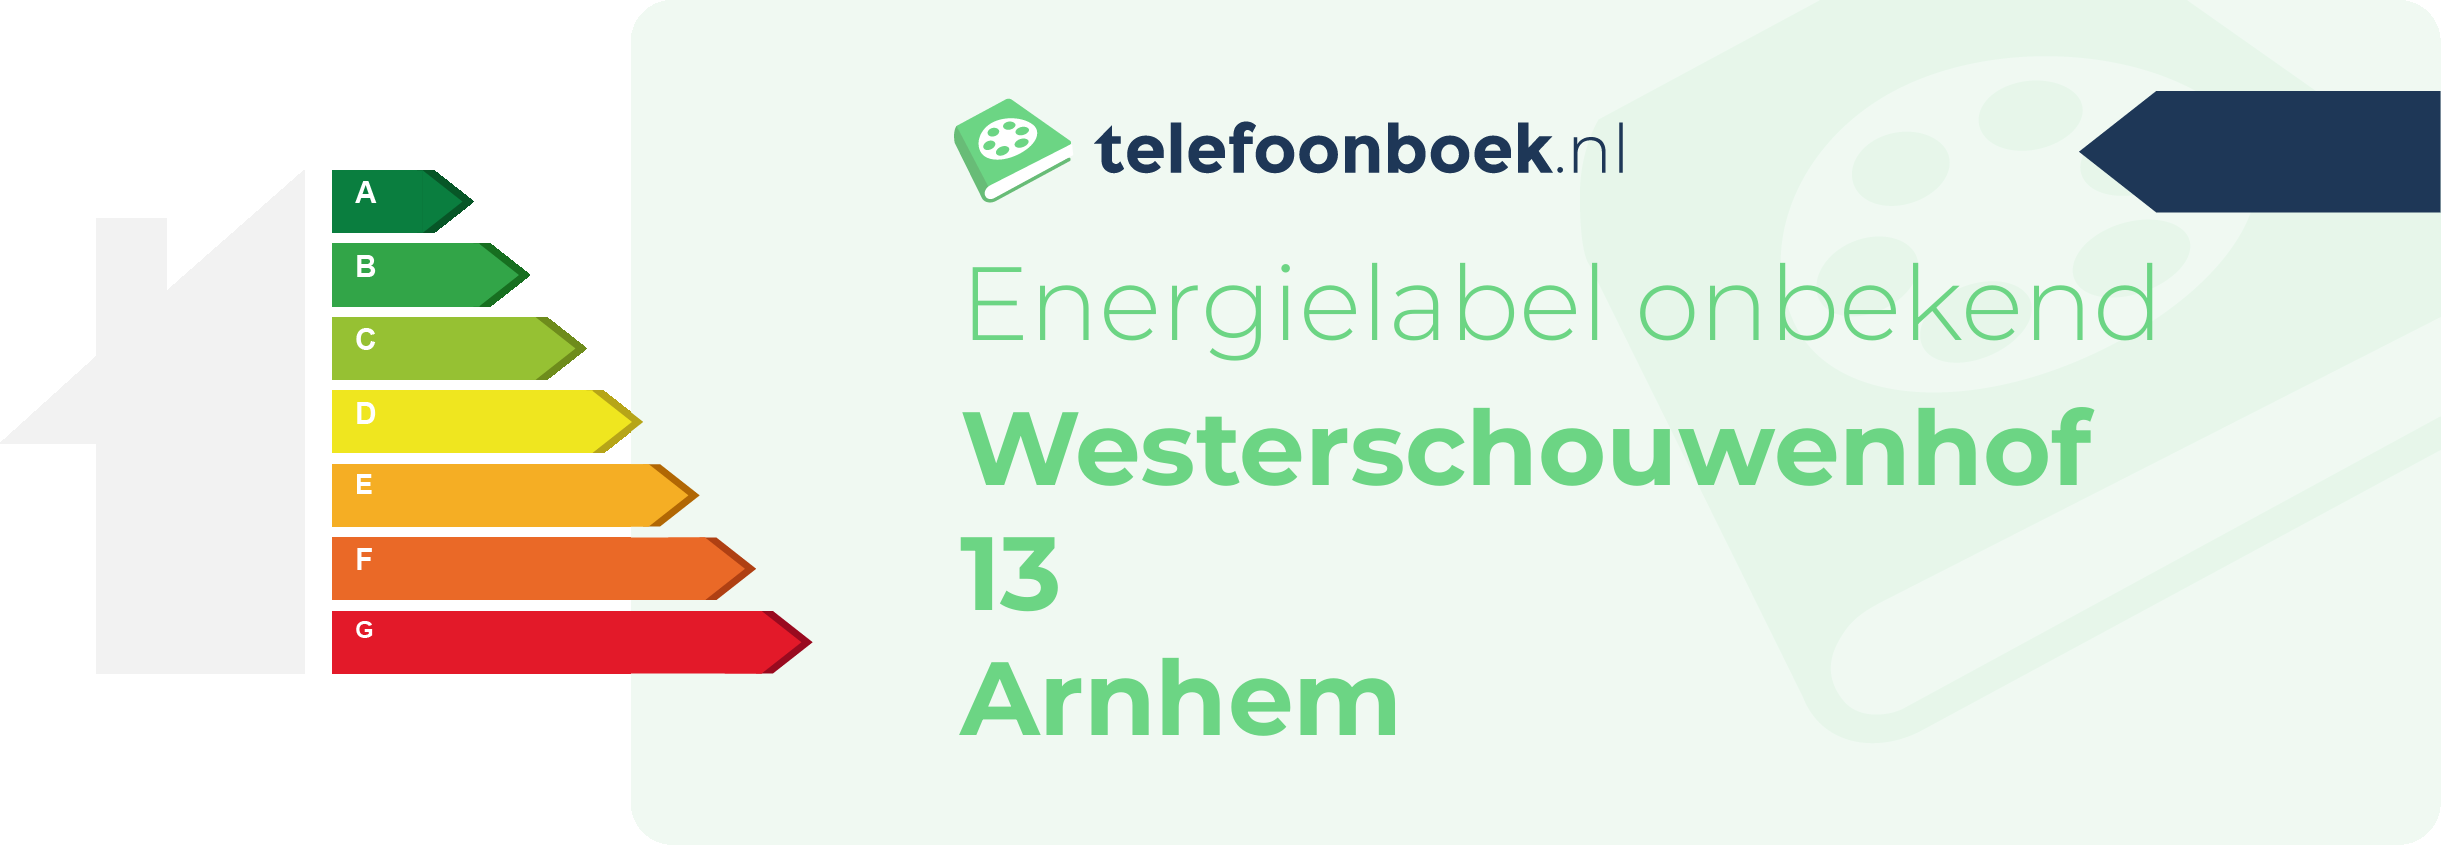 Energielabel Westerschouwenhof 13 Arnhem